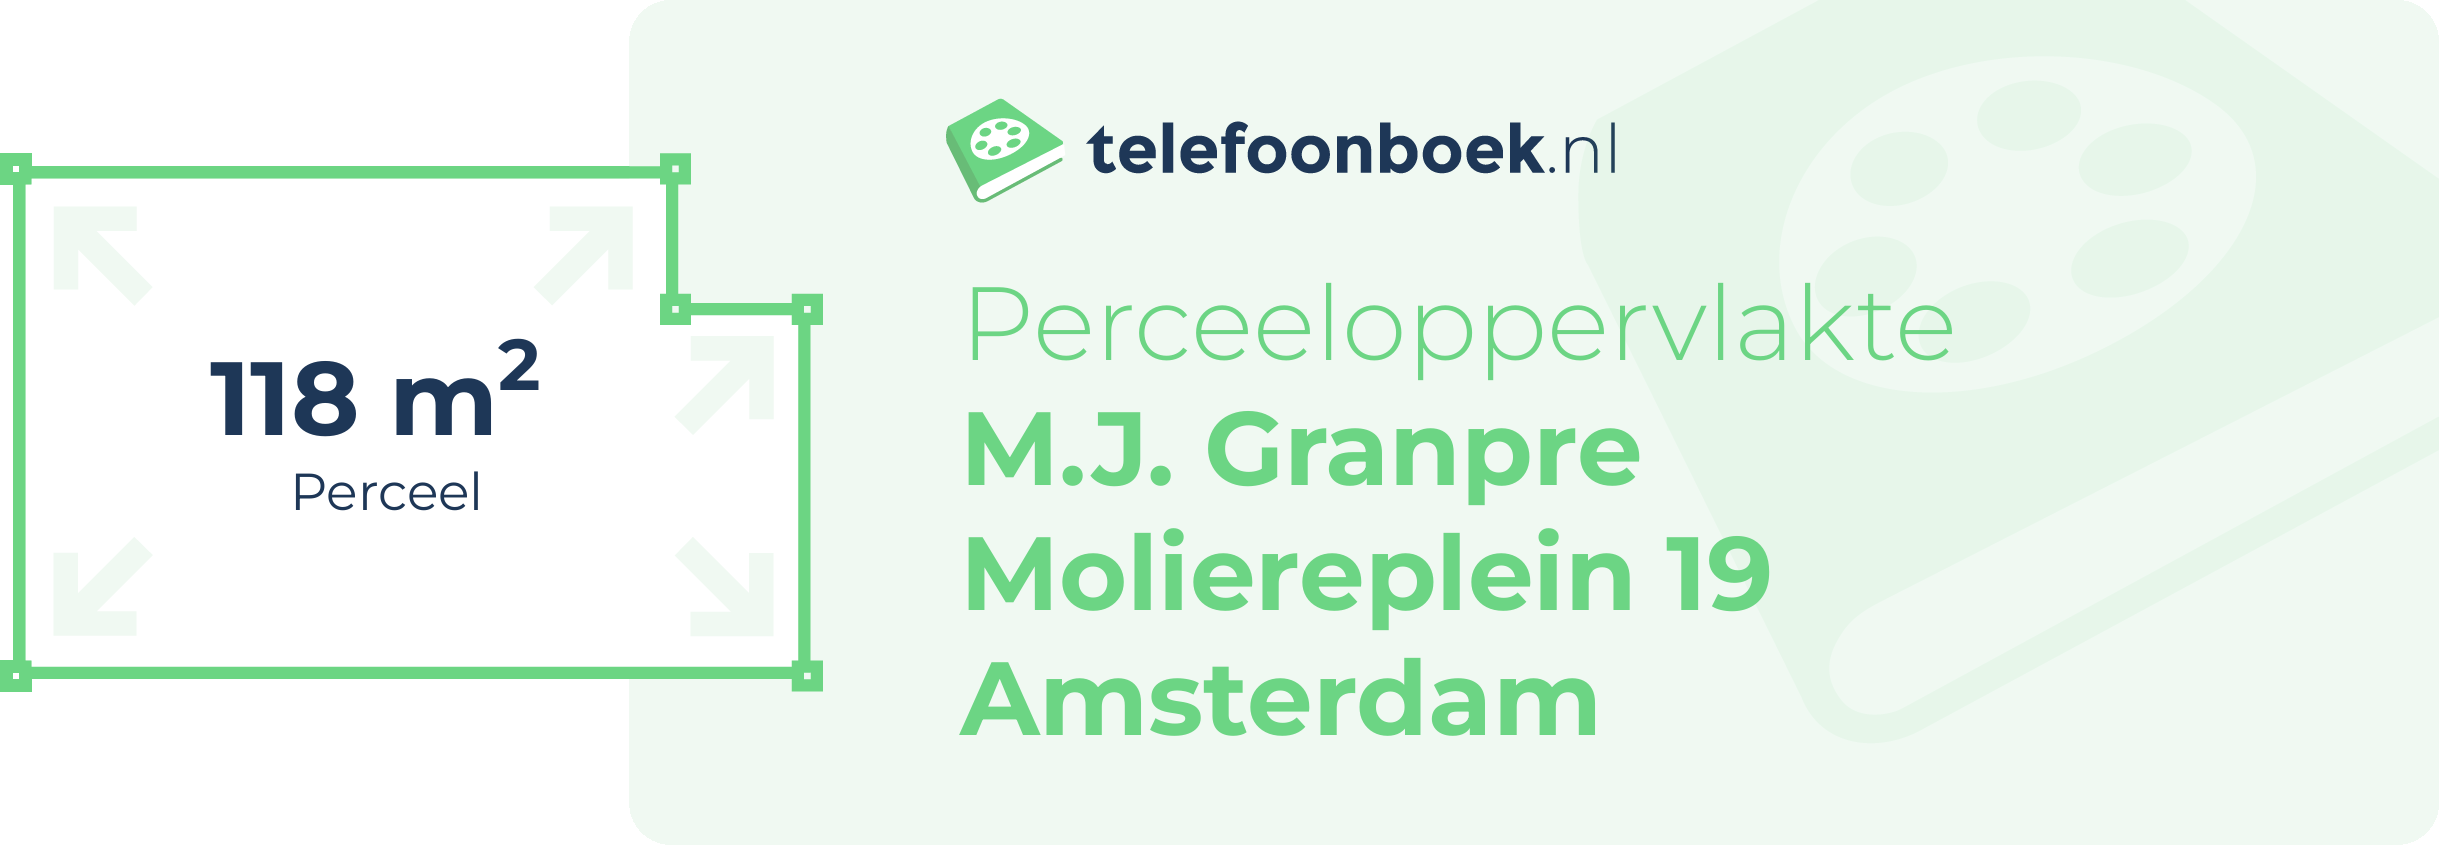 Perceeloppervlakte M.J. Granpre Moliereplein 19 Amsterdam